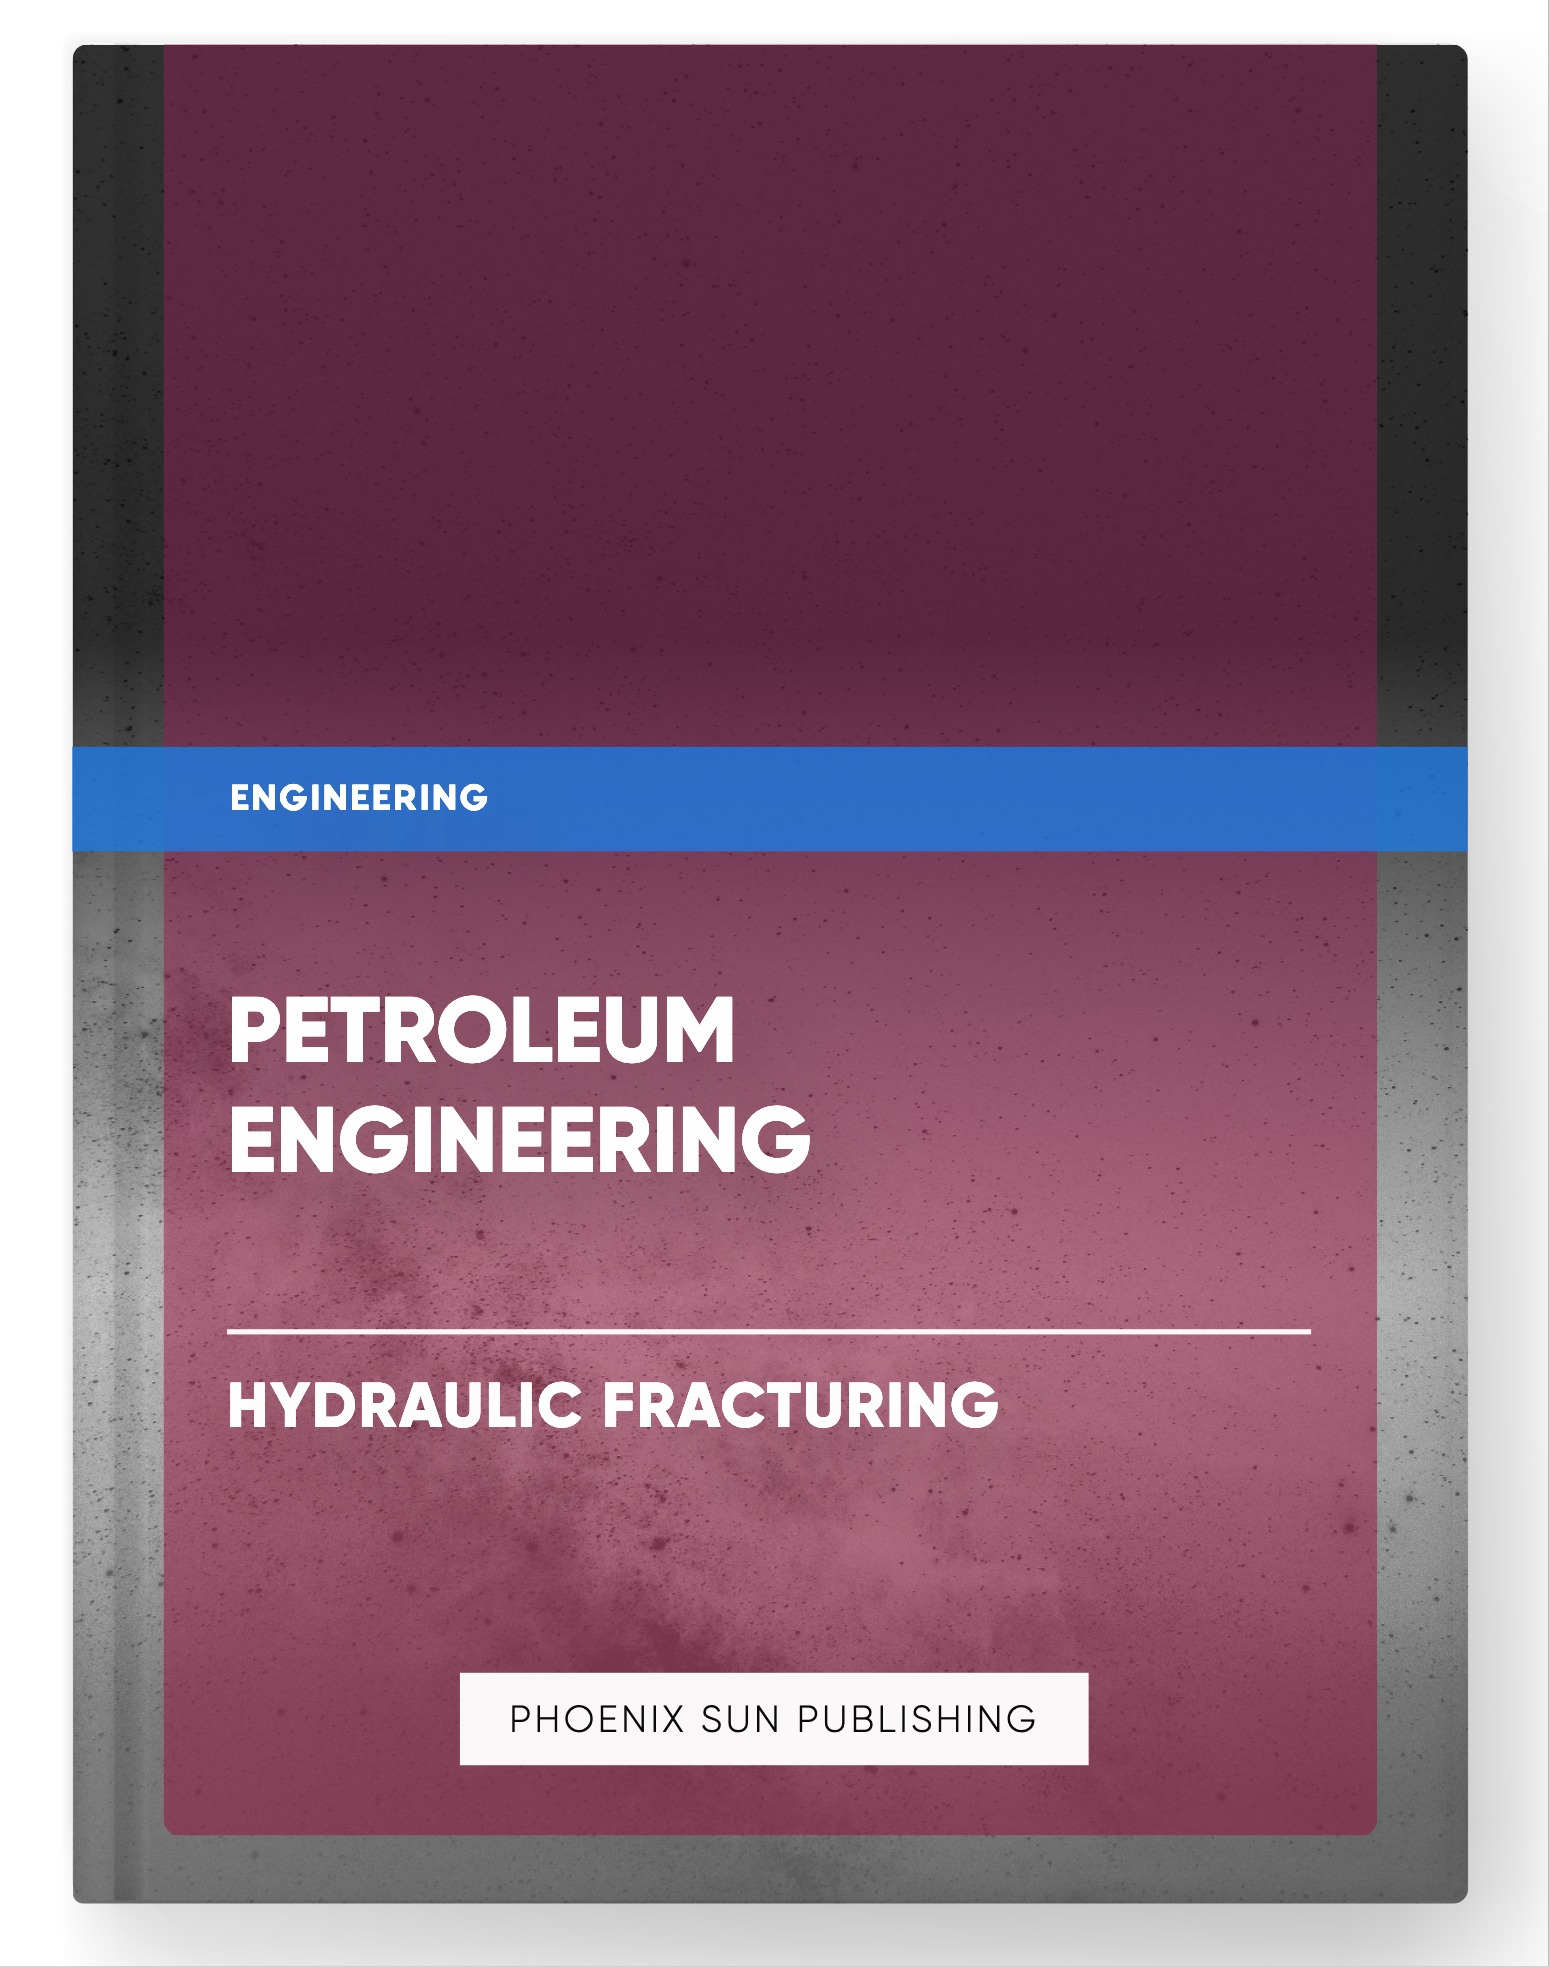 Petroleum Engineering – Hydraulic Fracturing